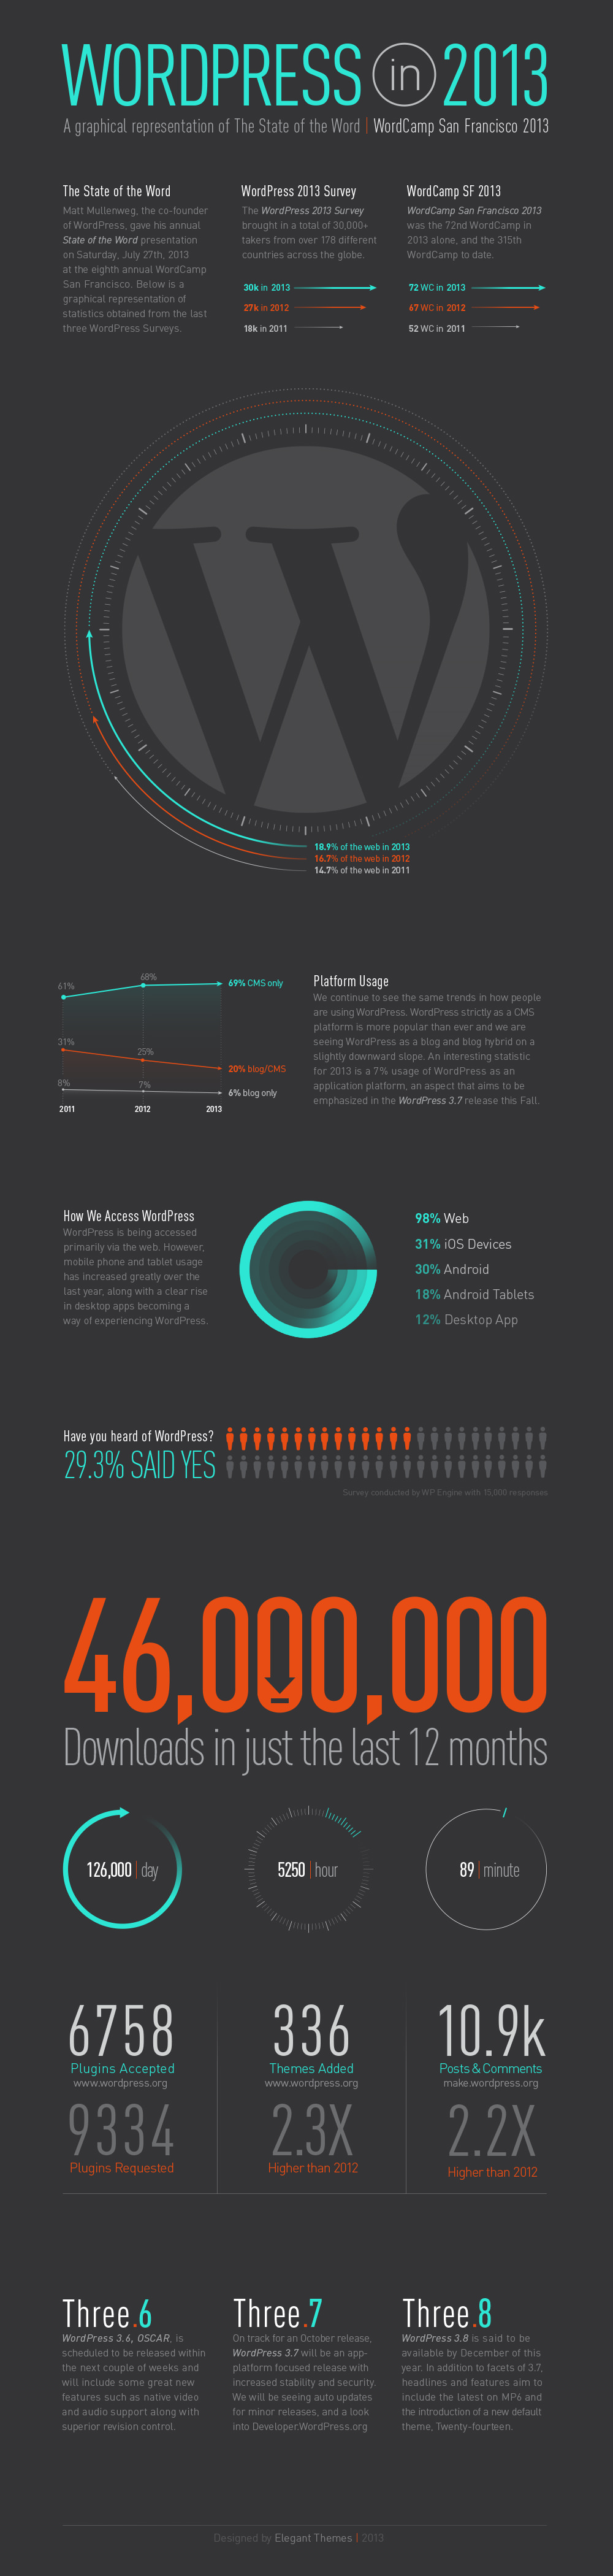 WordPress Statistiken als Infografik